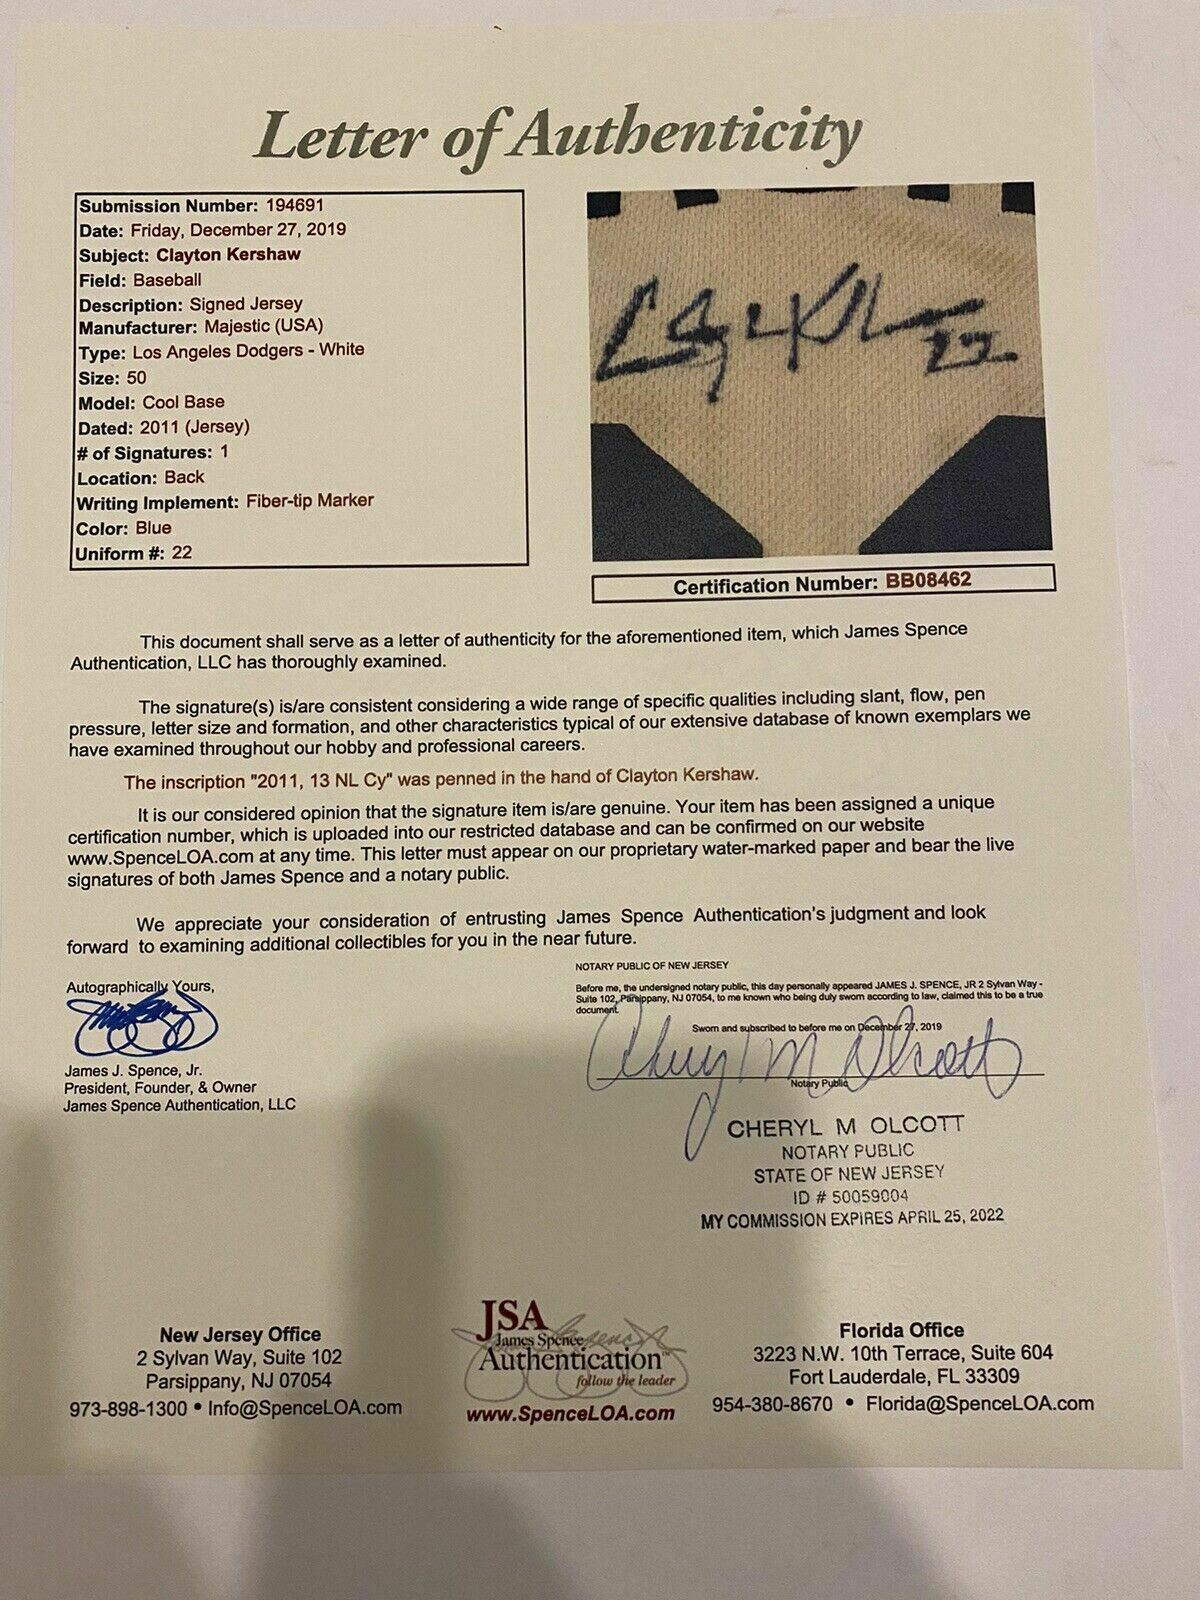 Dodgers Clayton Kershaw Authentic Signed White Nike Jersey JSA Witness